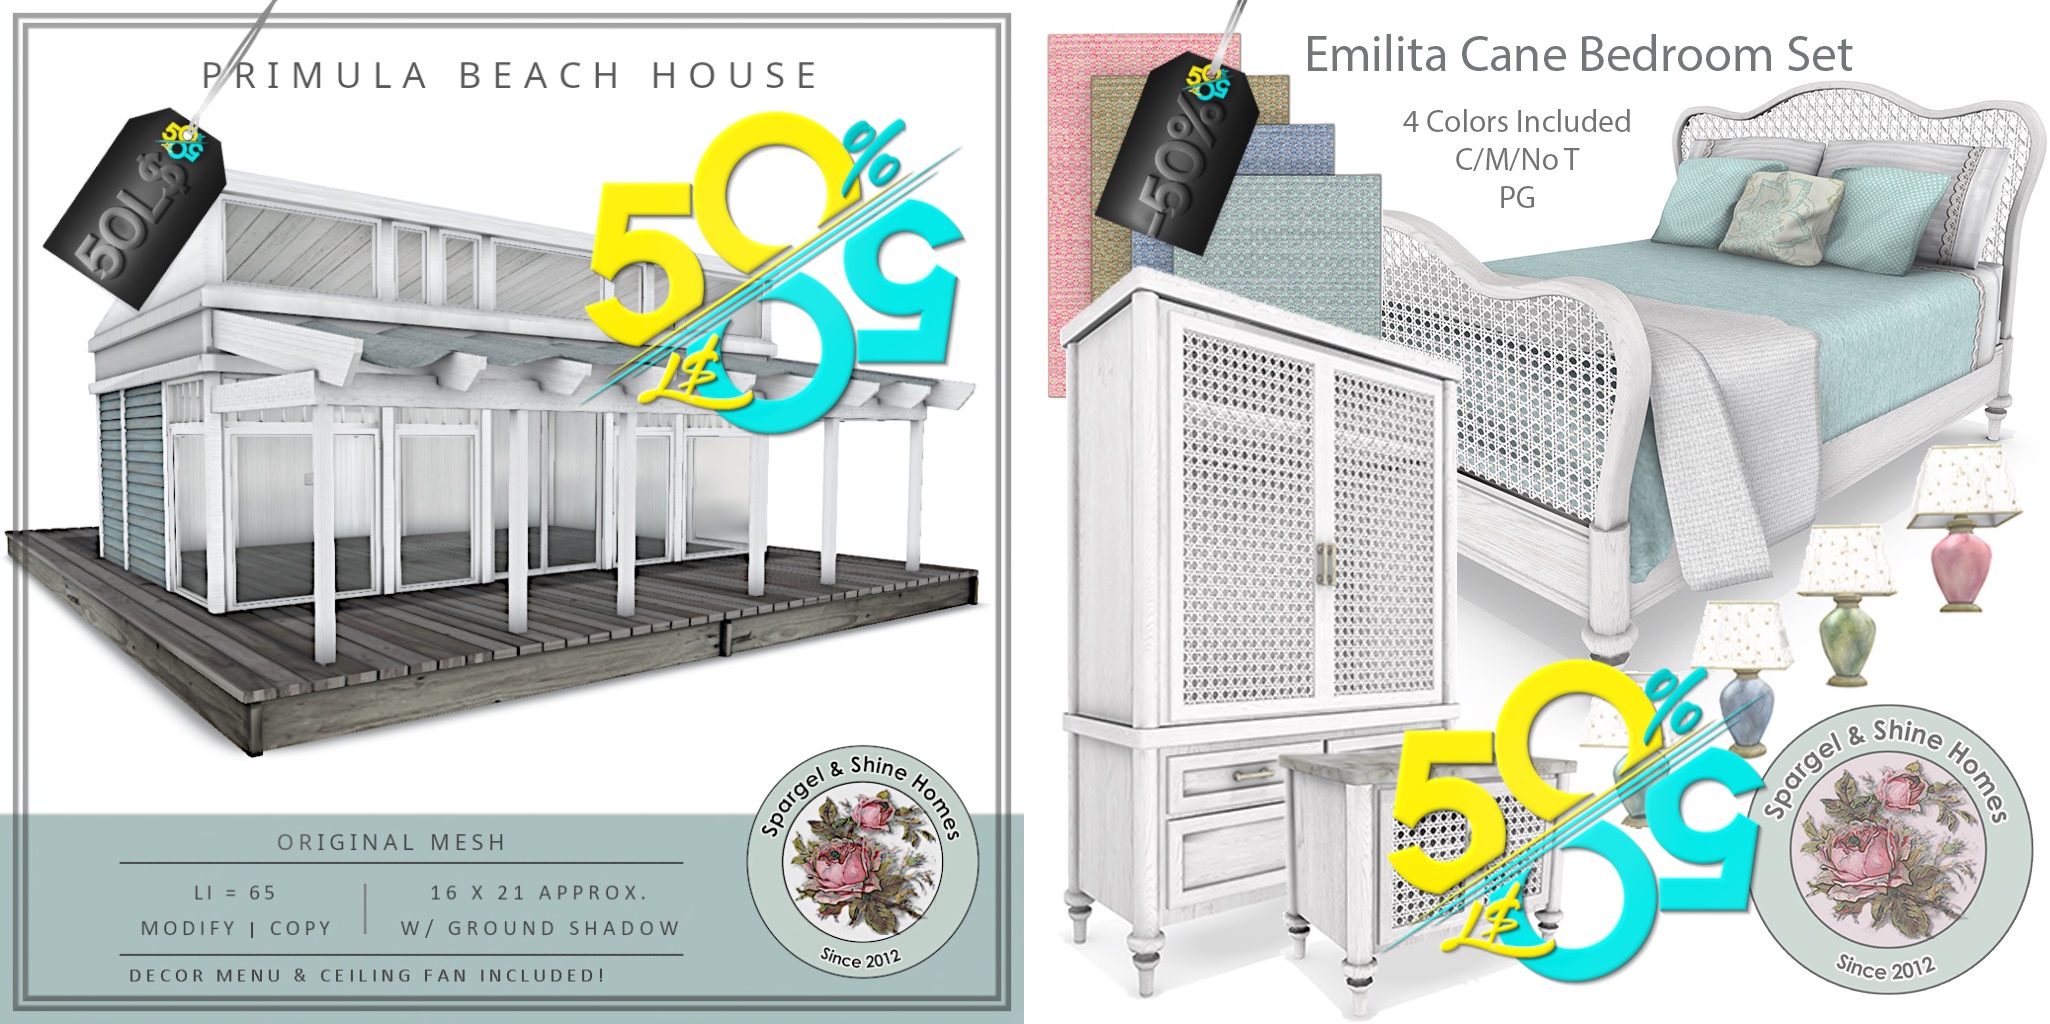 Spargel & Shine – Primula Beach House & Emilita Cane Bedroom Set